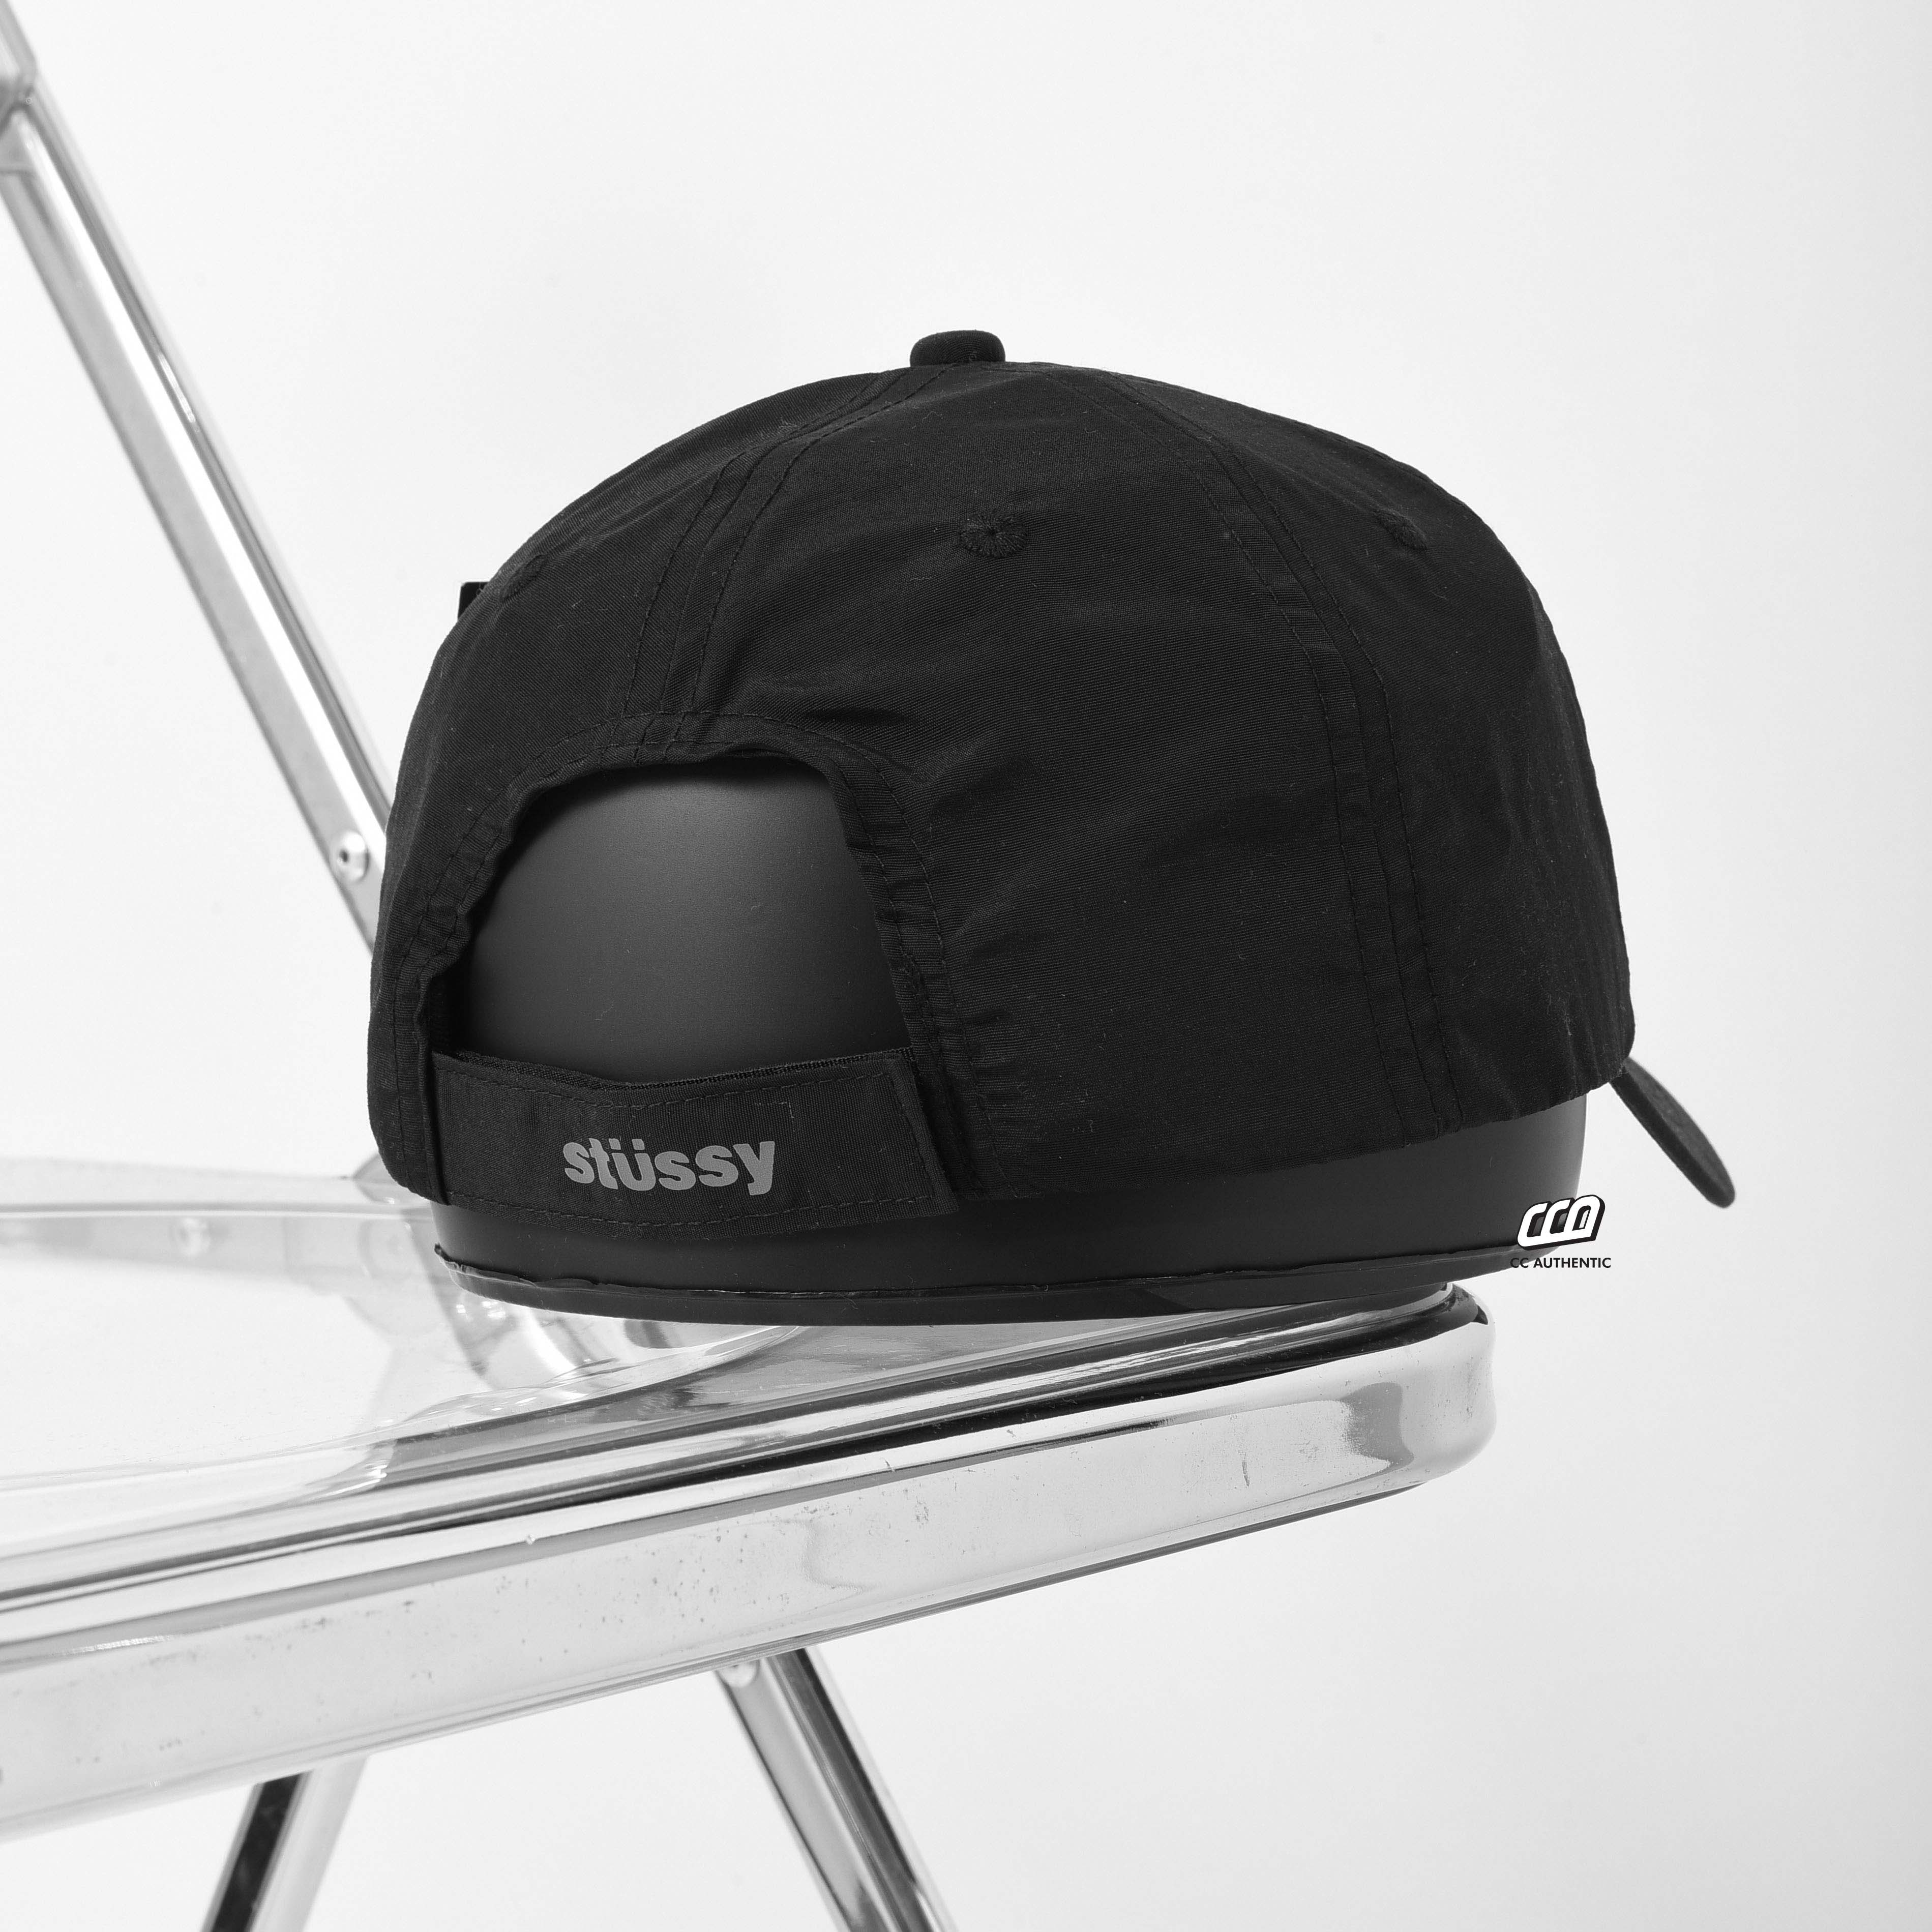 STUSSY NYLONG REFLECTIVE CAP - BLACK